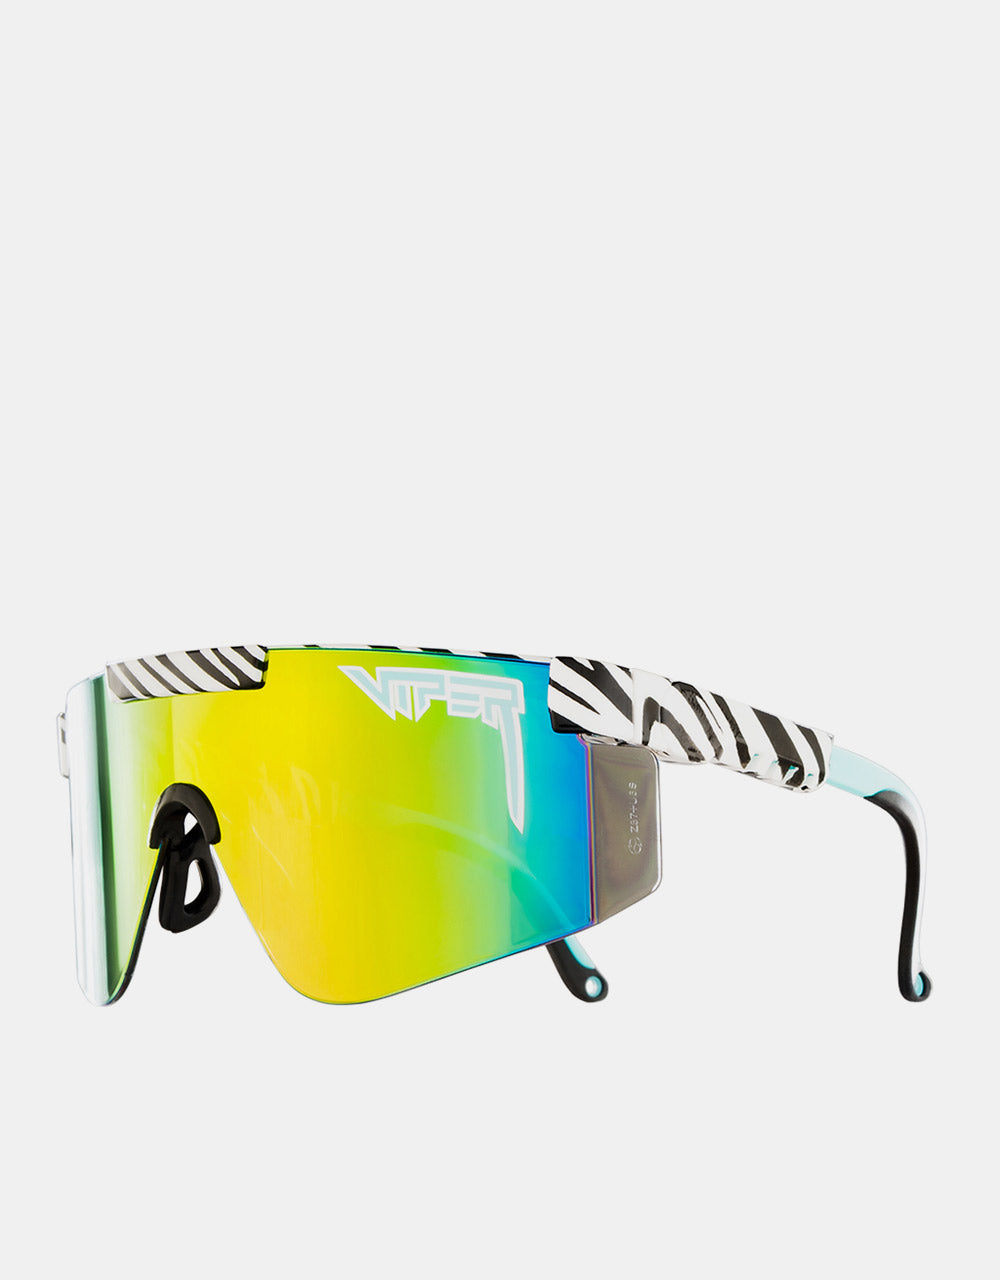 Pit Viper Herbivore Sunglasses - Rainbow Revo